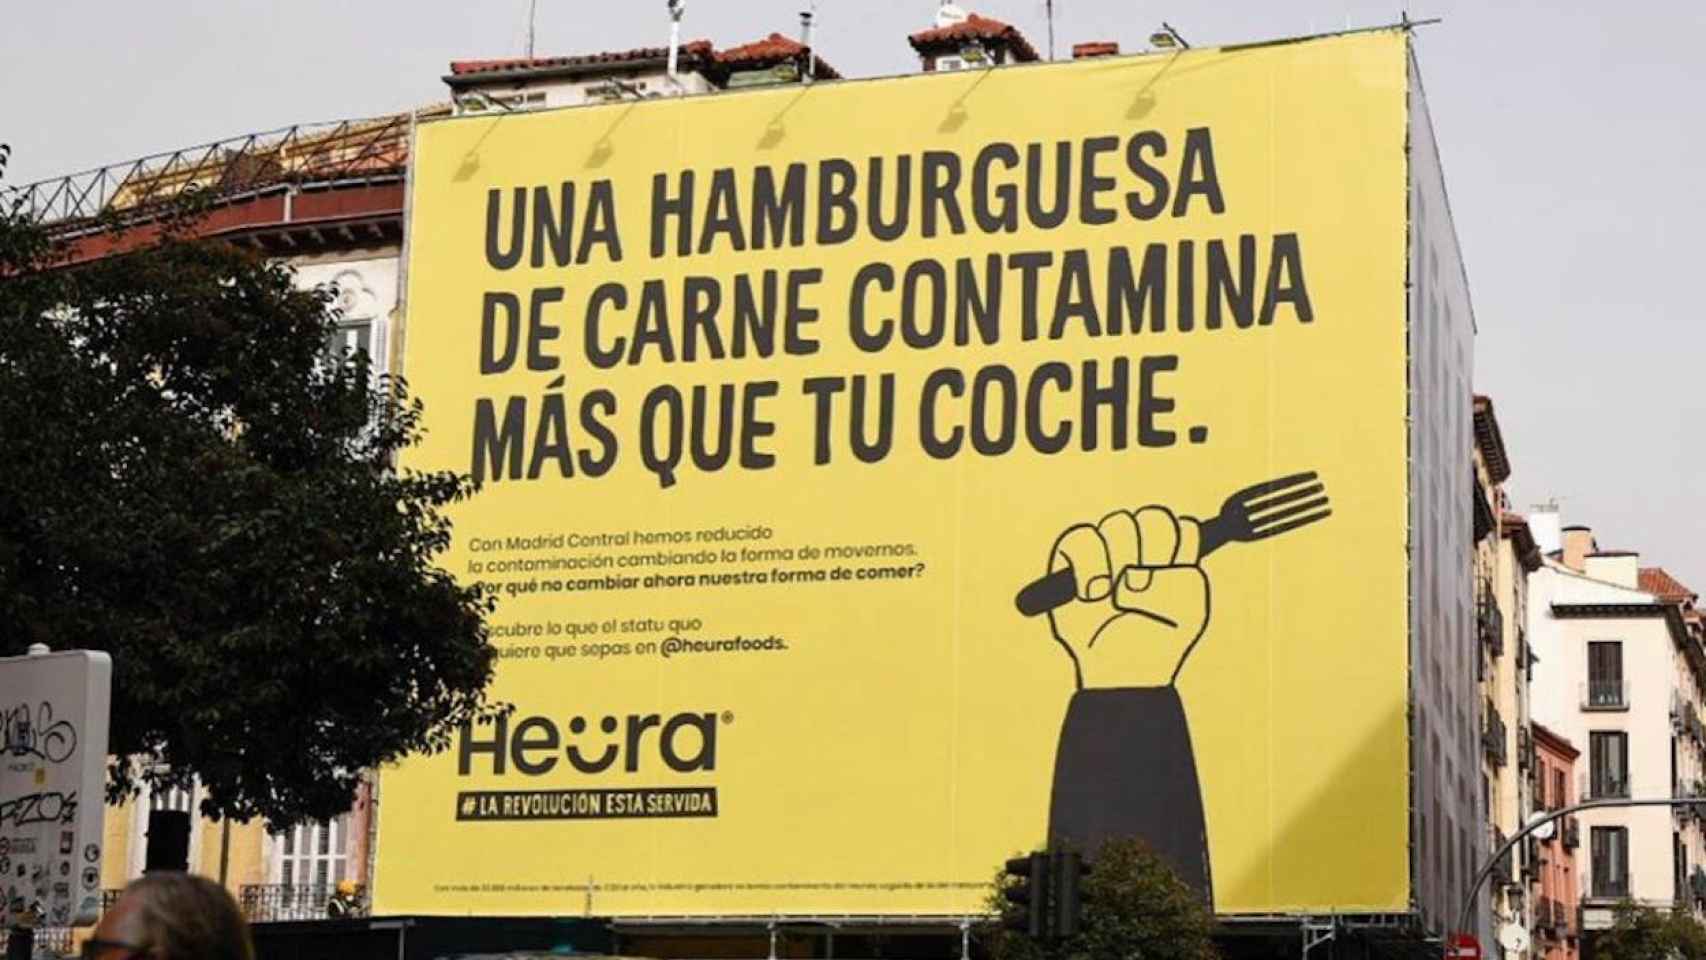 Campaña publicitaria de la startup barcelonesa Heura en Madrid / HEURA